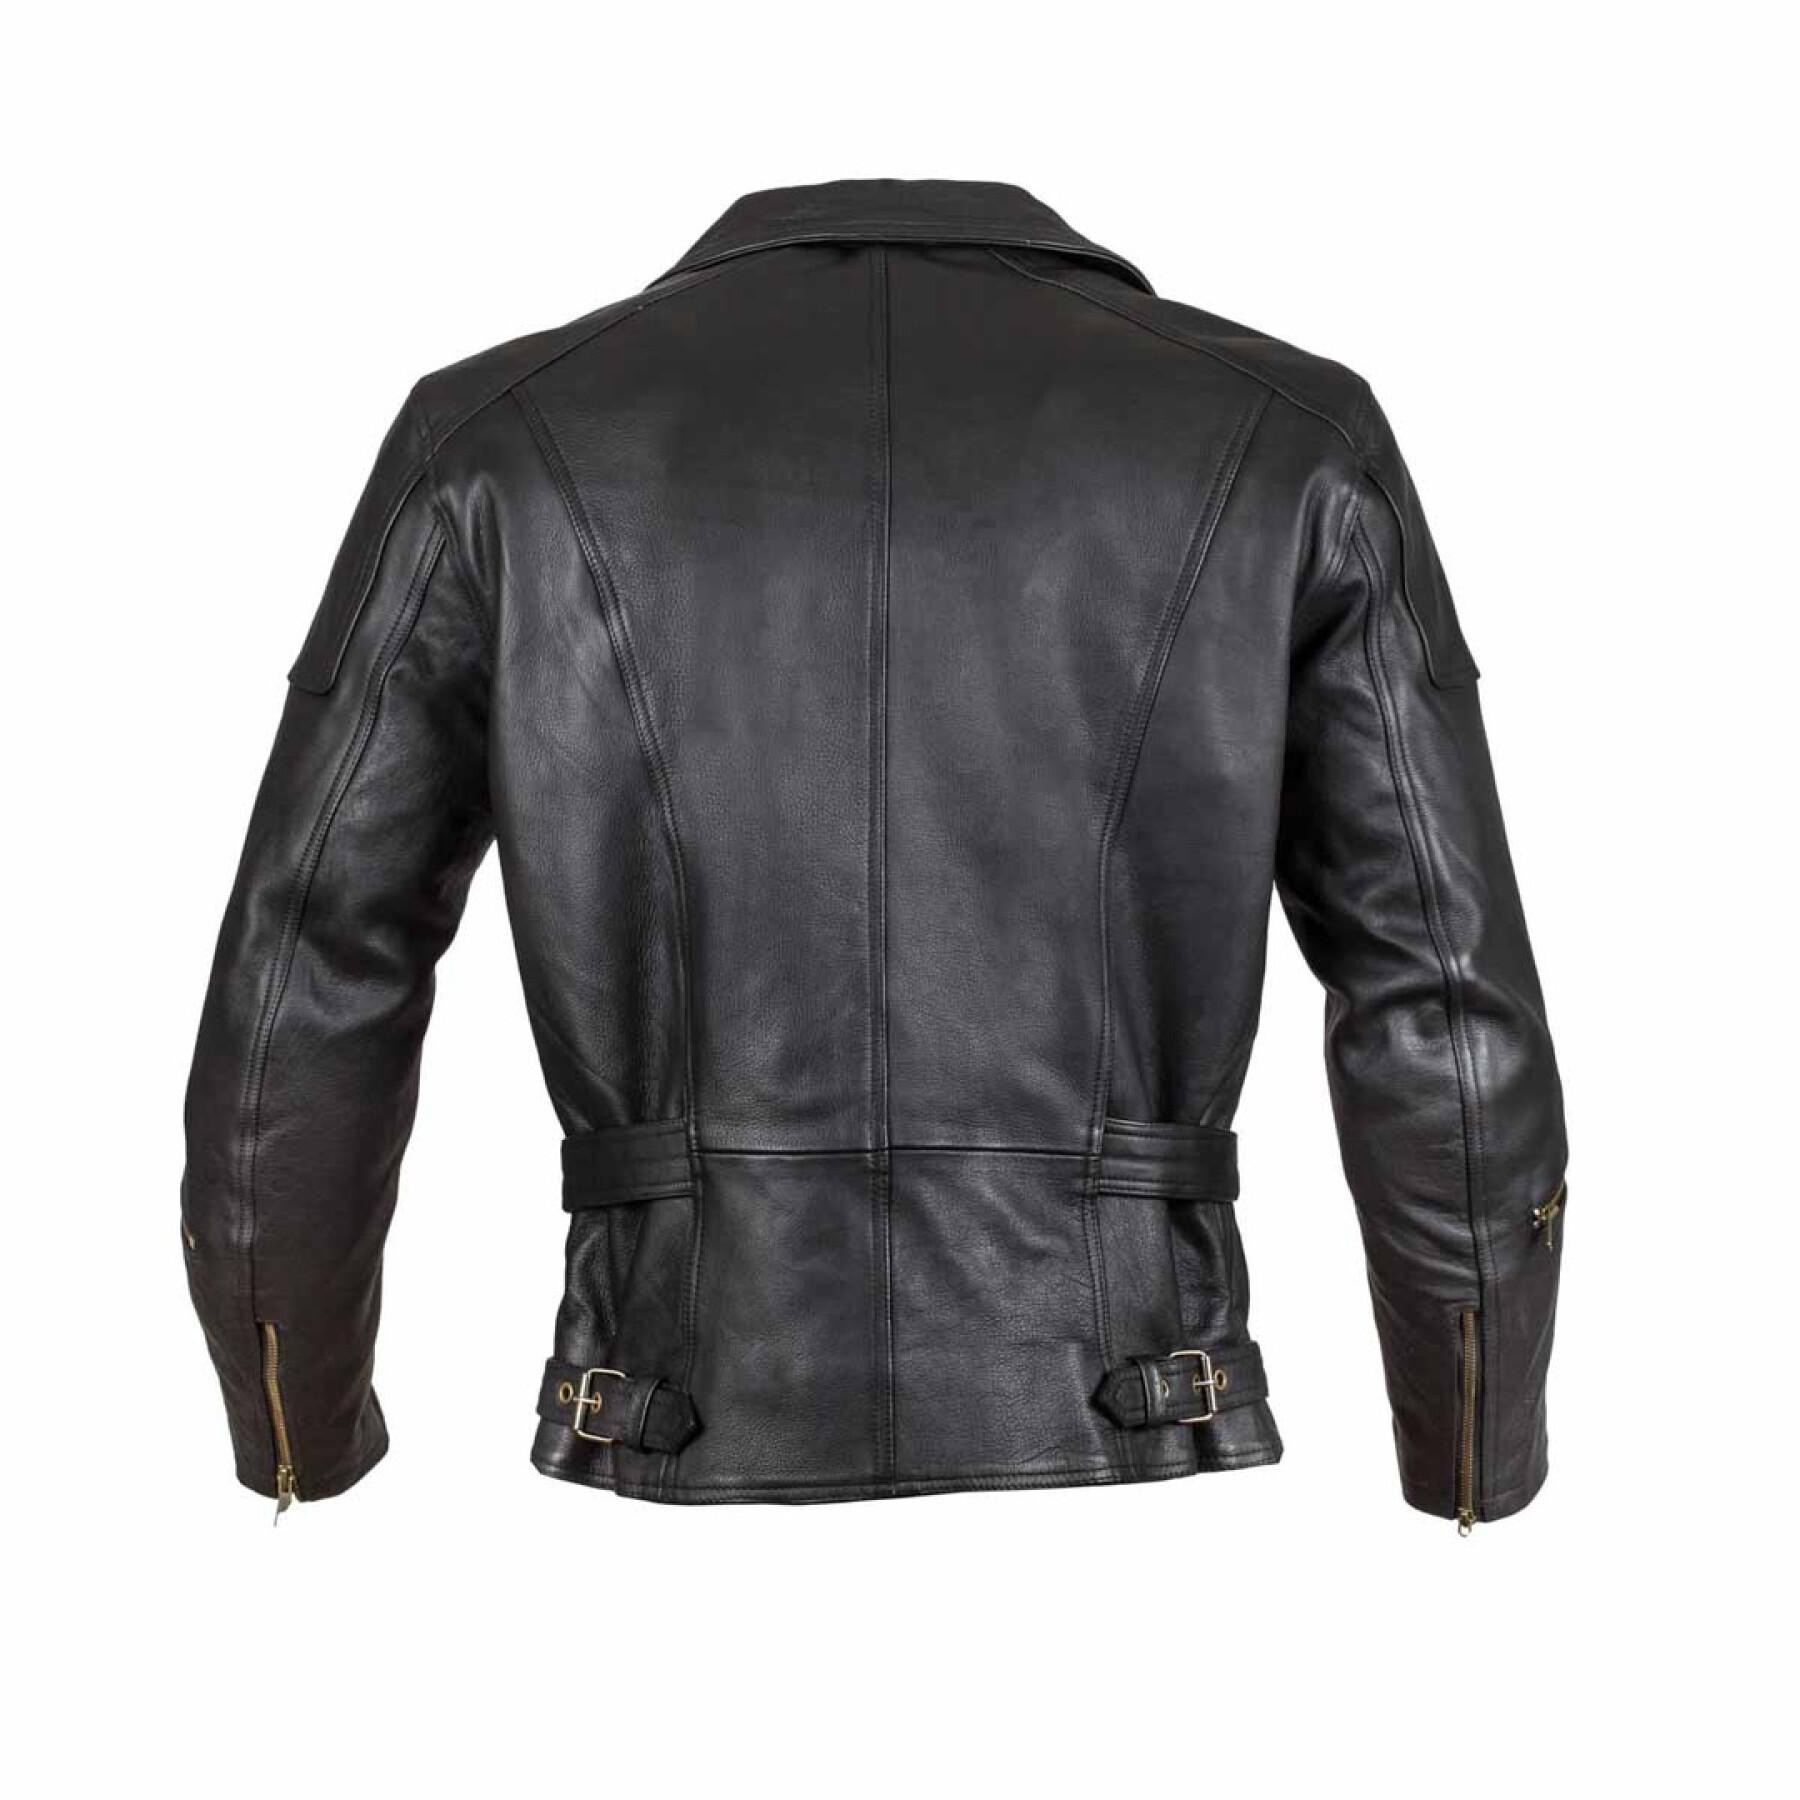 Motorcycle jacket gt IXS classic